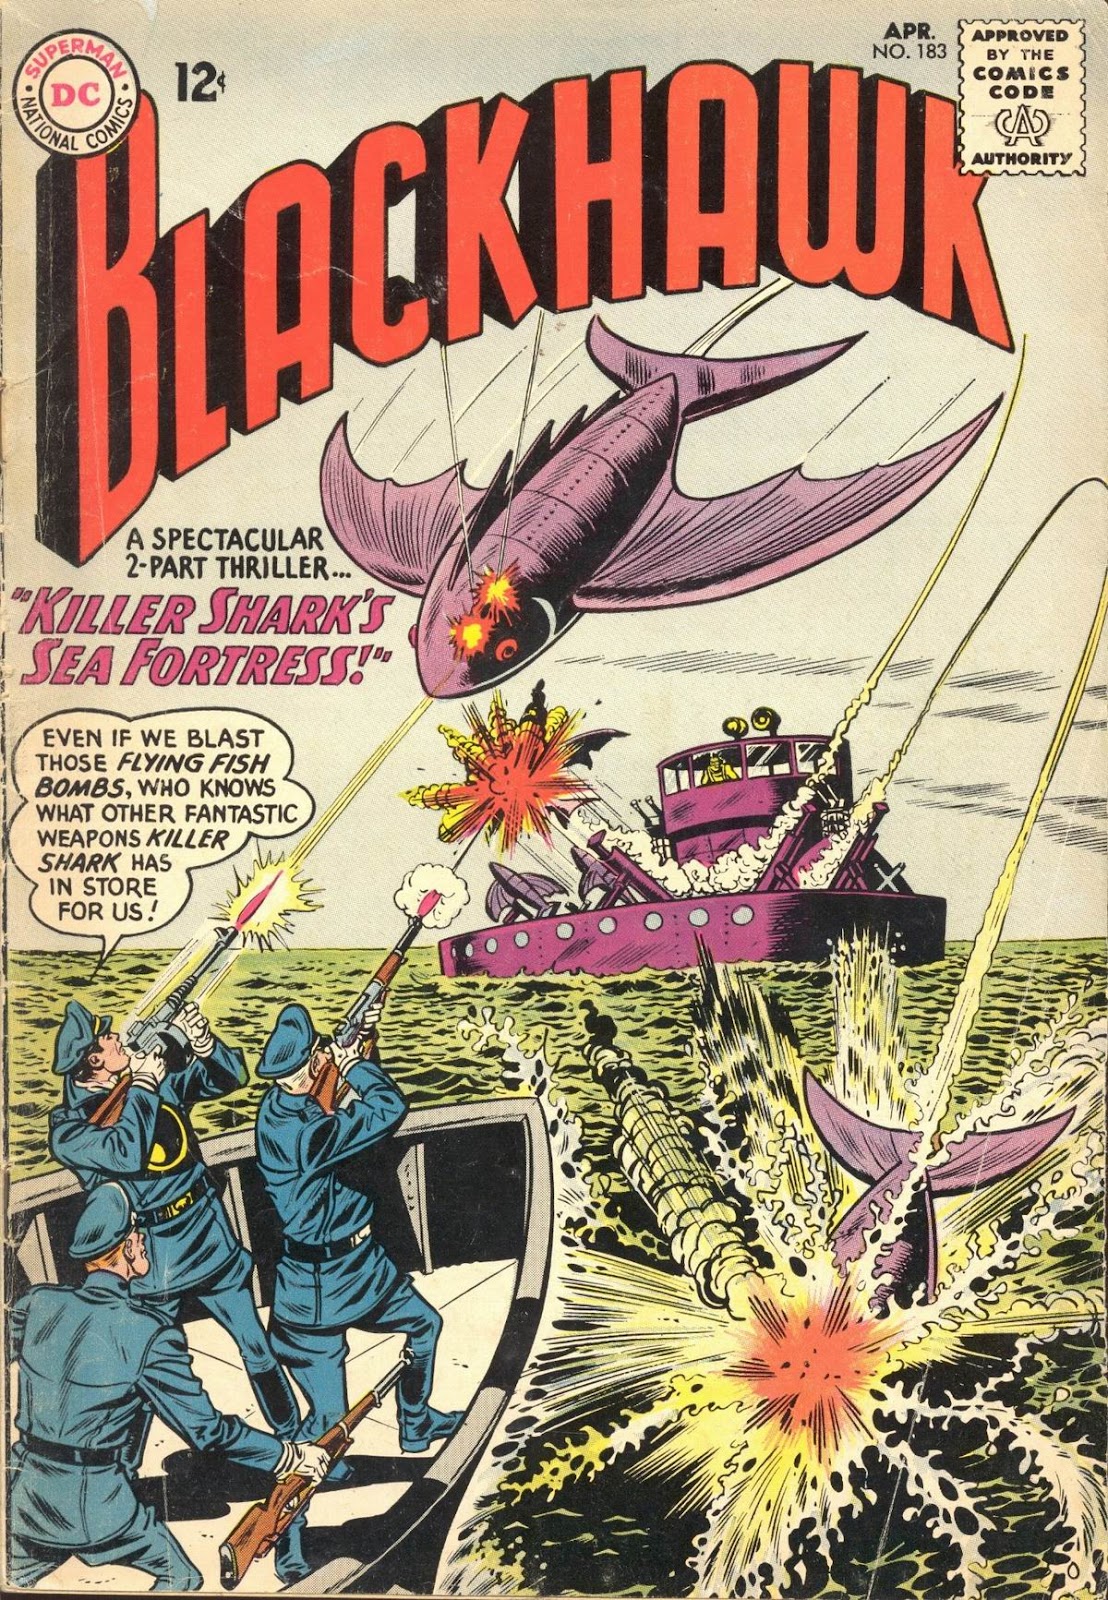 Blackhawk (1957) issue 183 - Page 1